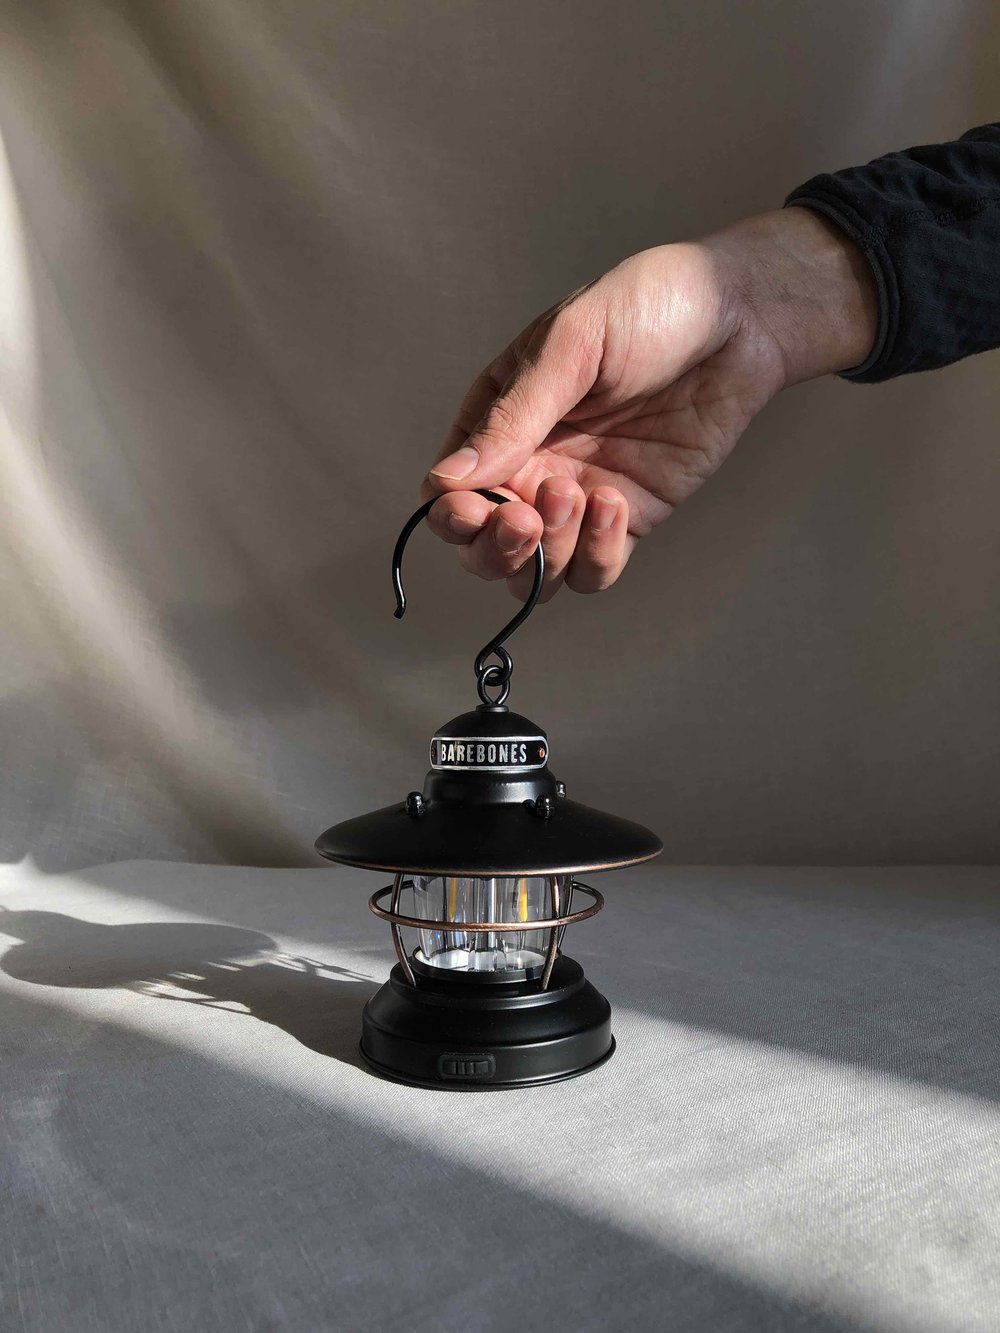 Edison Mini Lantern - Antique Bronze